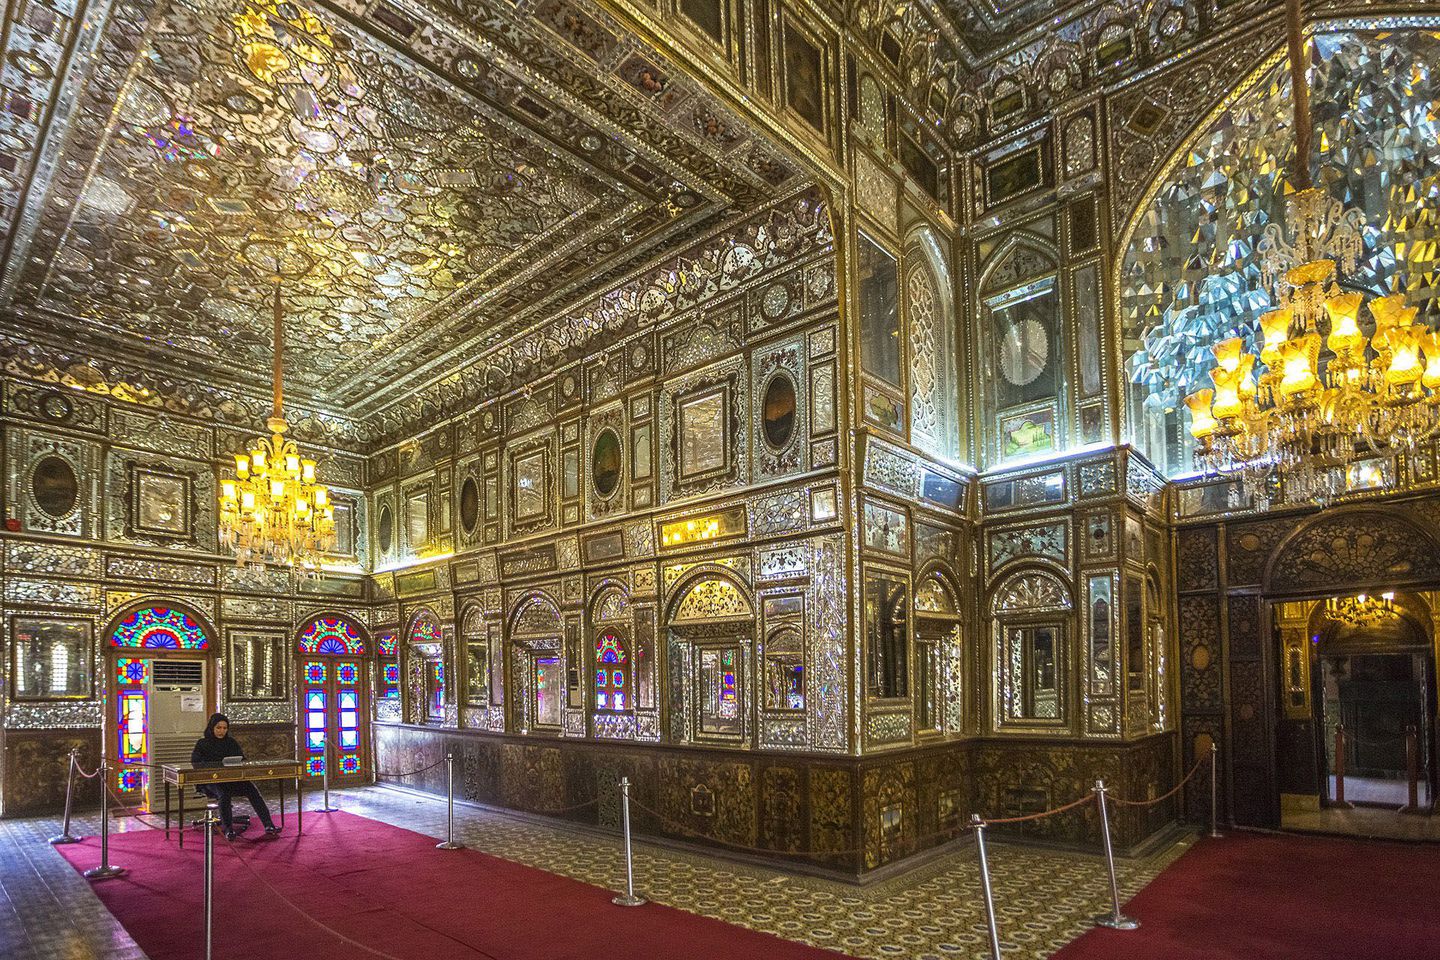 Golestan royal palaces of Tehran